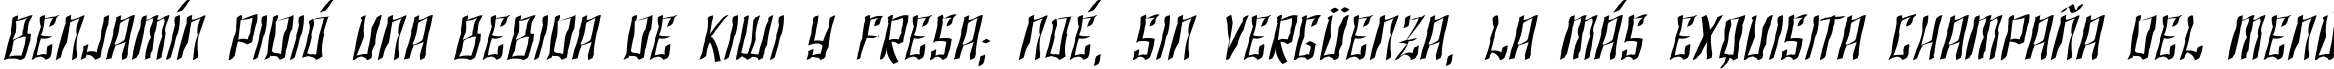 Пример написания шрифтом SF Shai Fontai Distressed Oblique текста на испанском